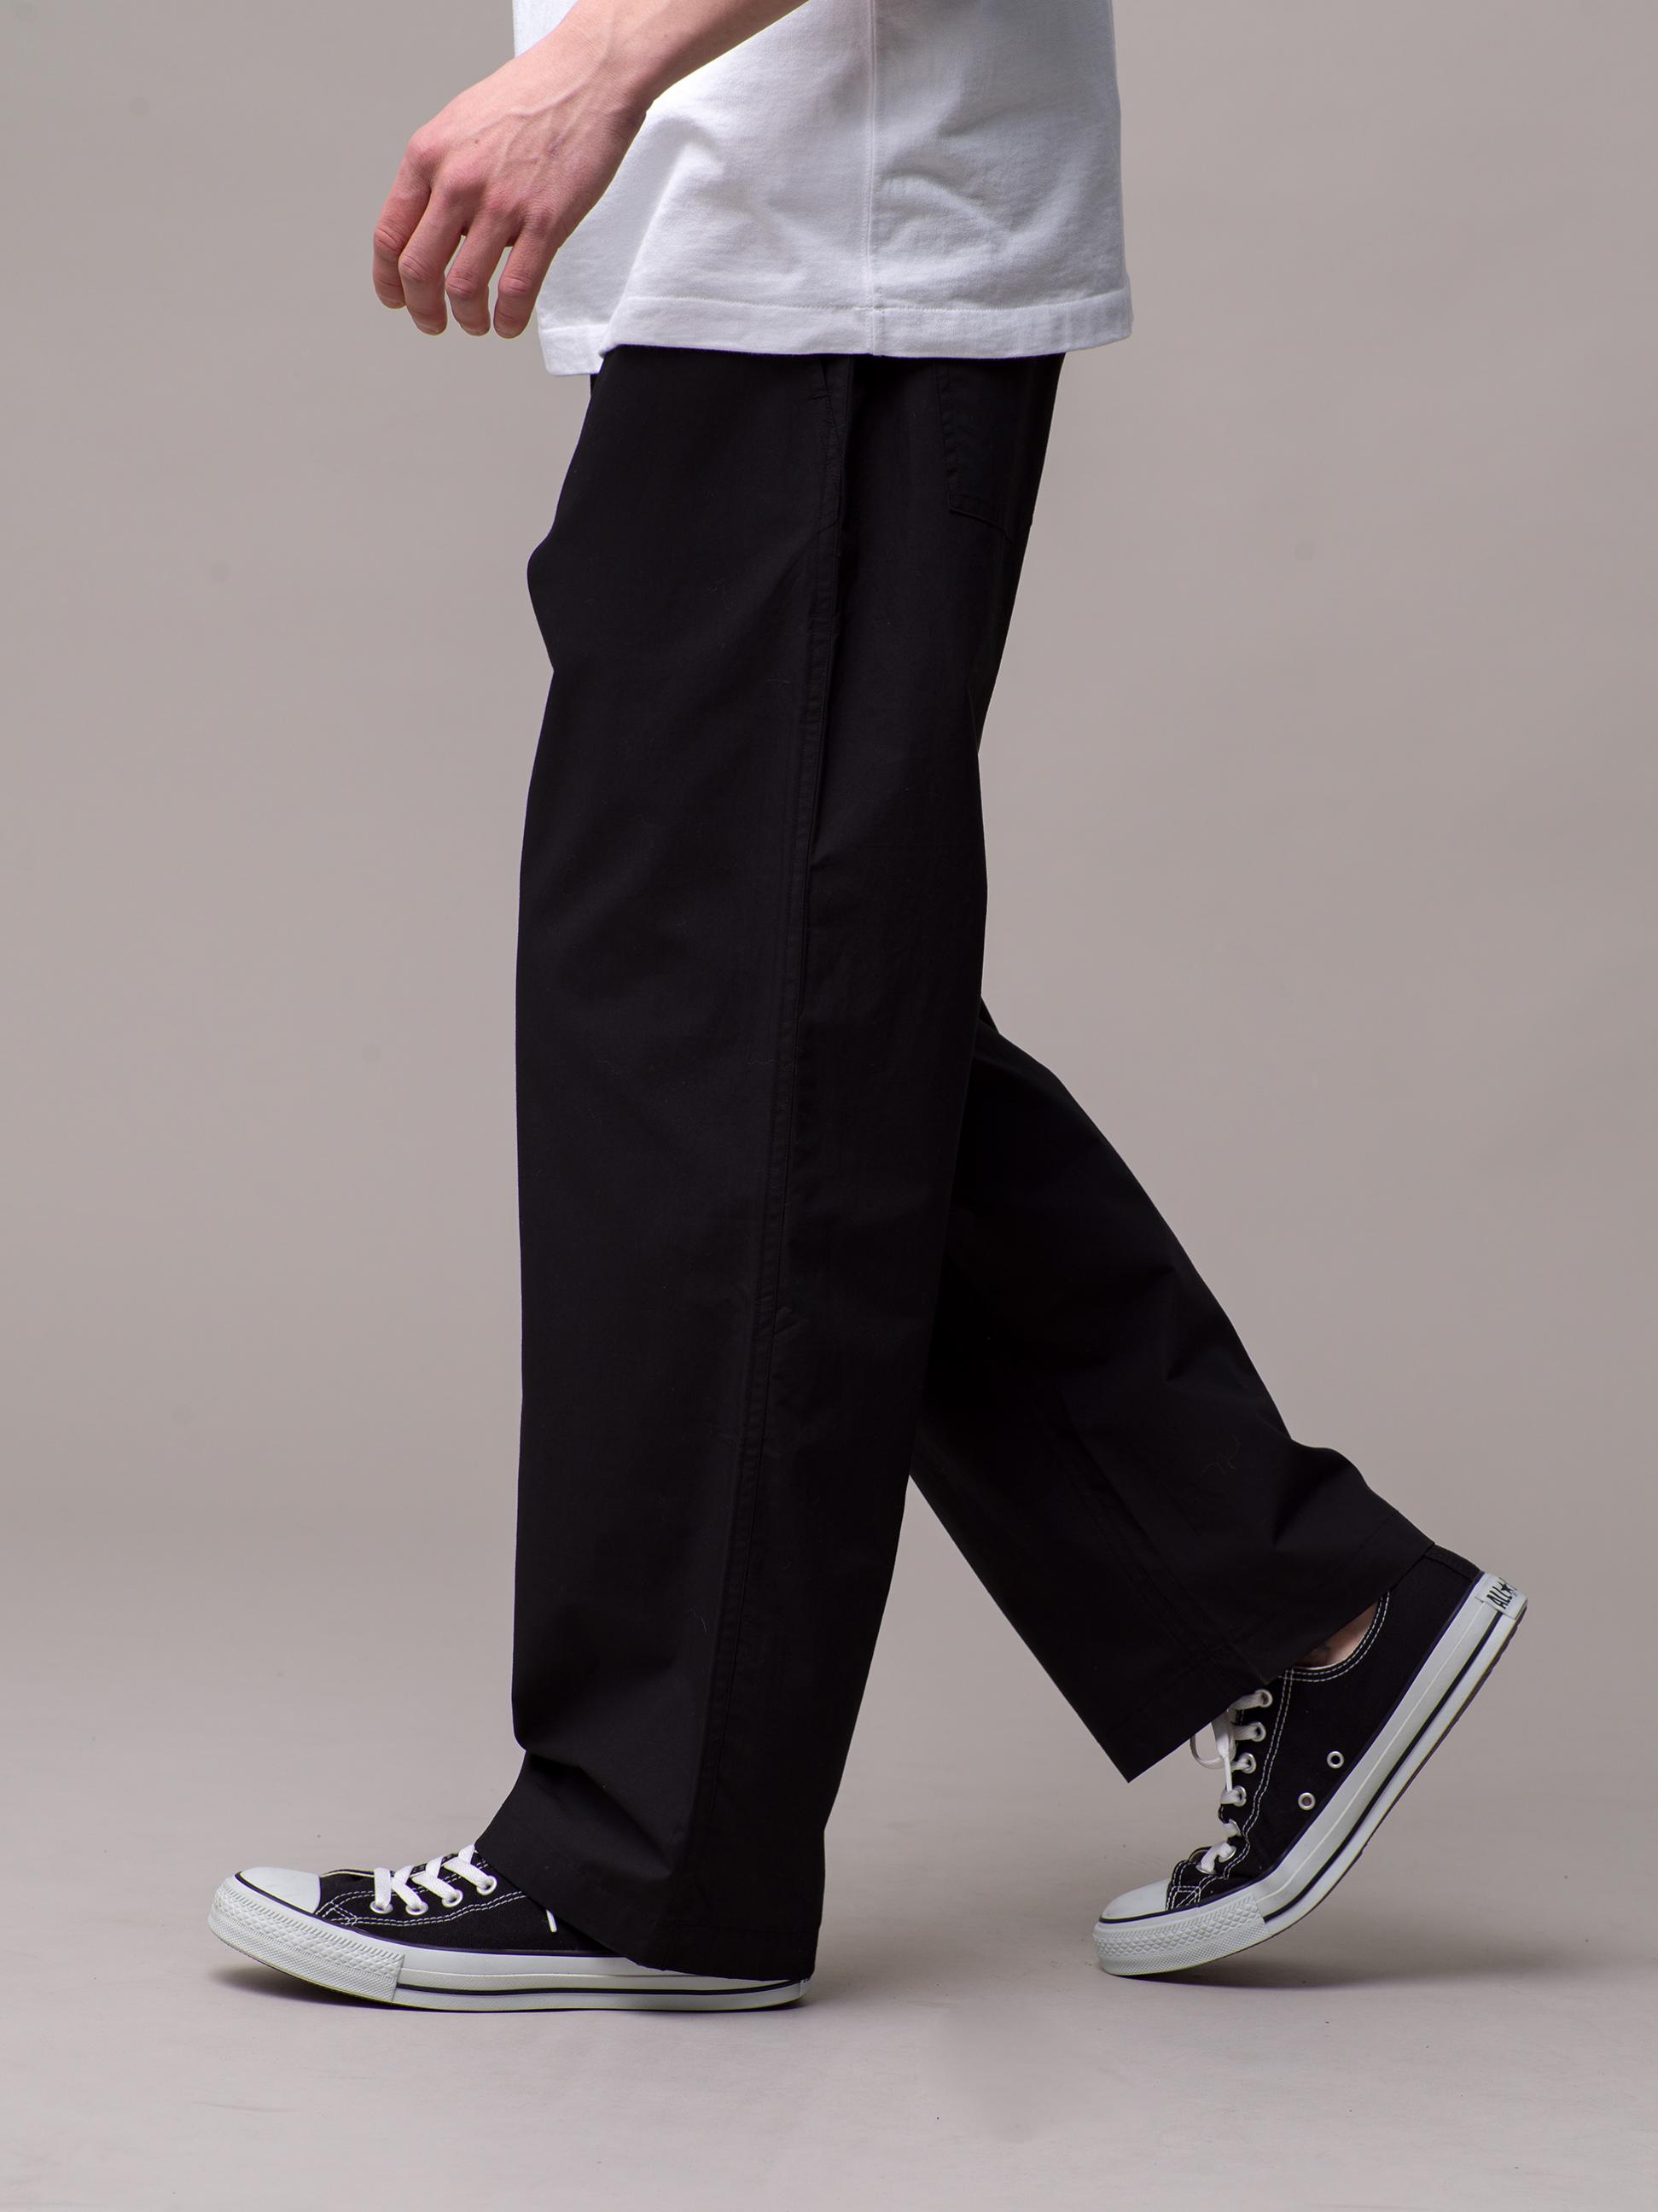 USN Short Sleeve Shirts&Pants